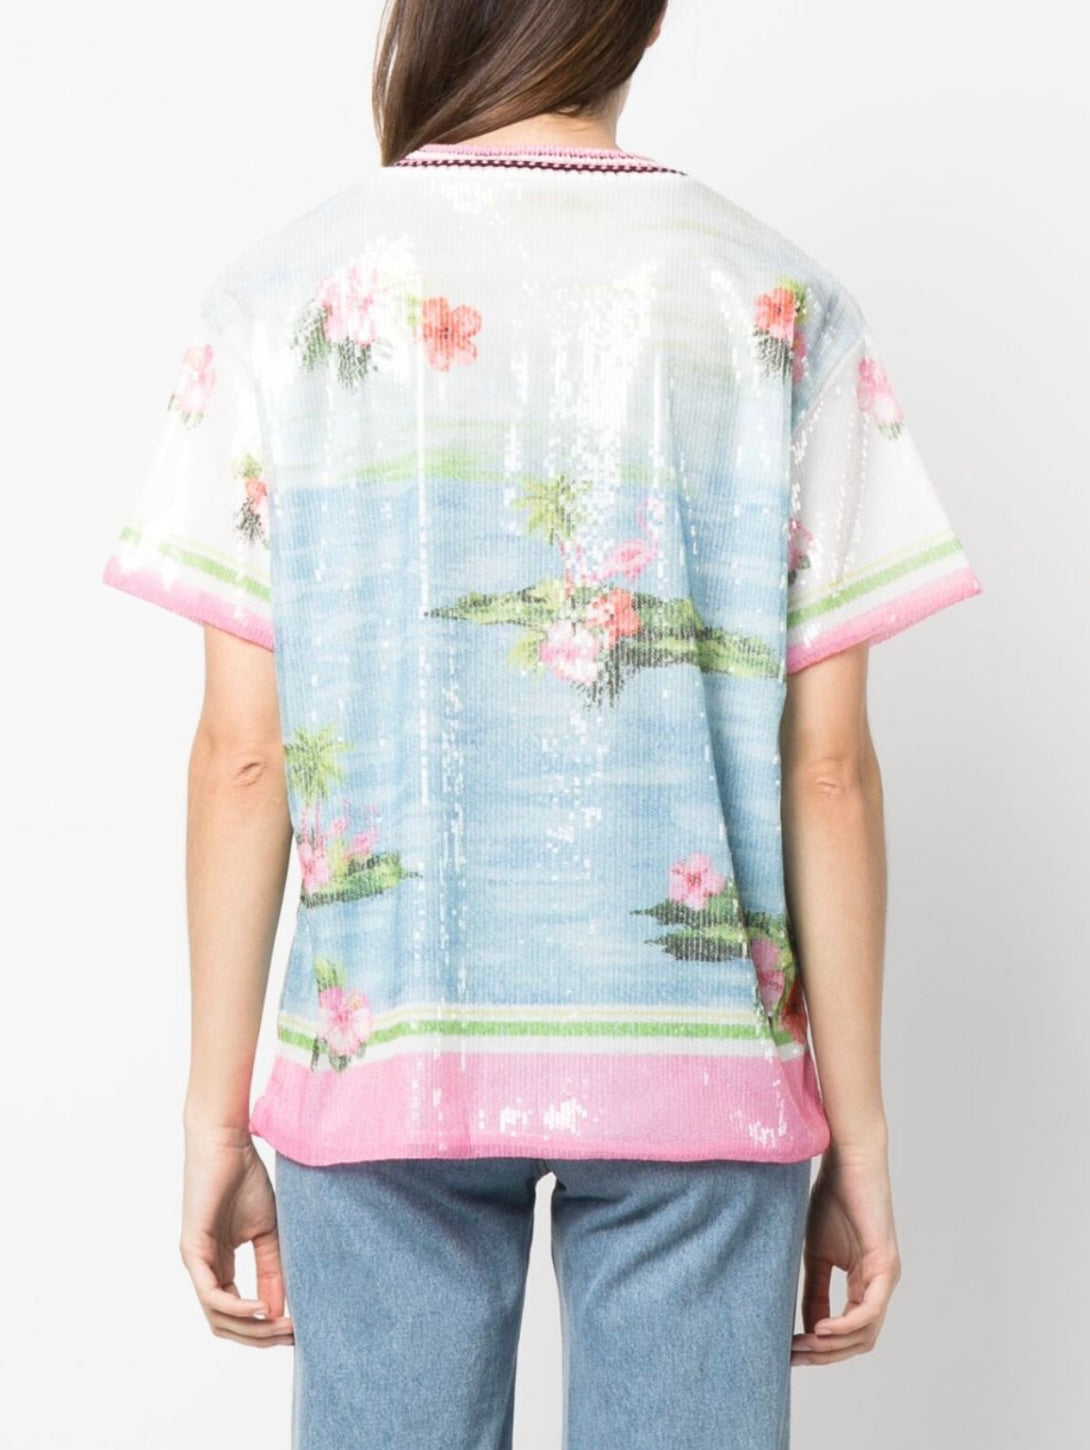 ERMANNO FIRENZE
sequin-embellished Flamingo T-shirt - Size 46